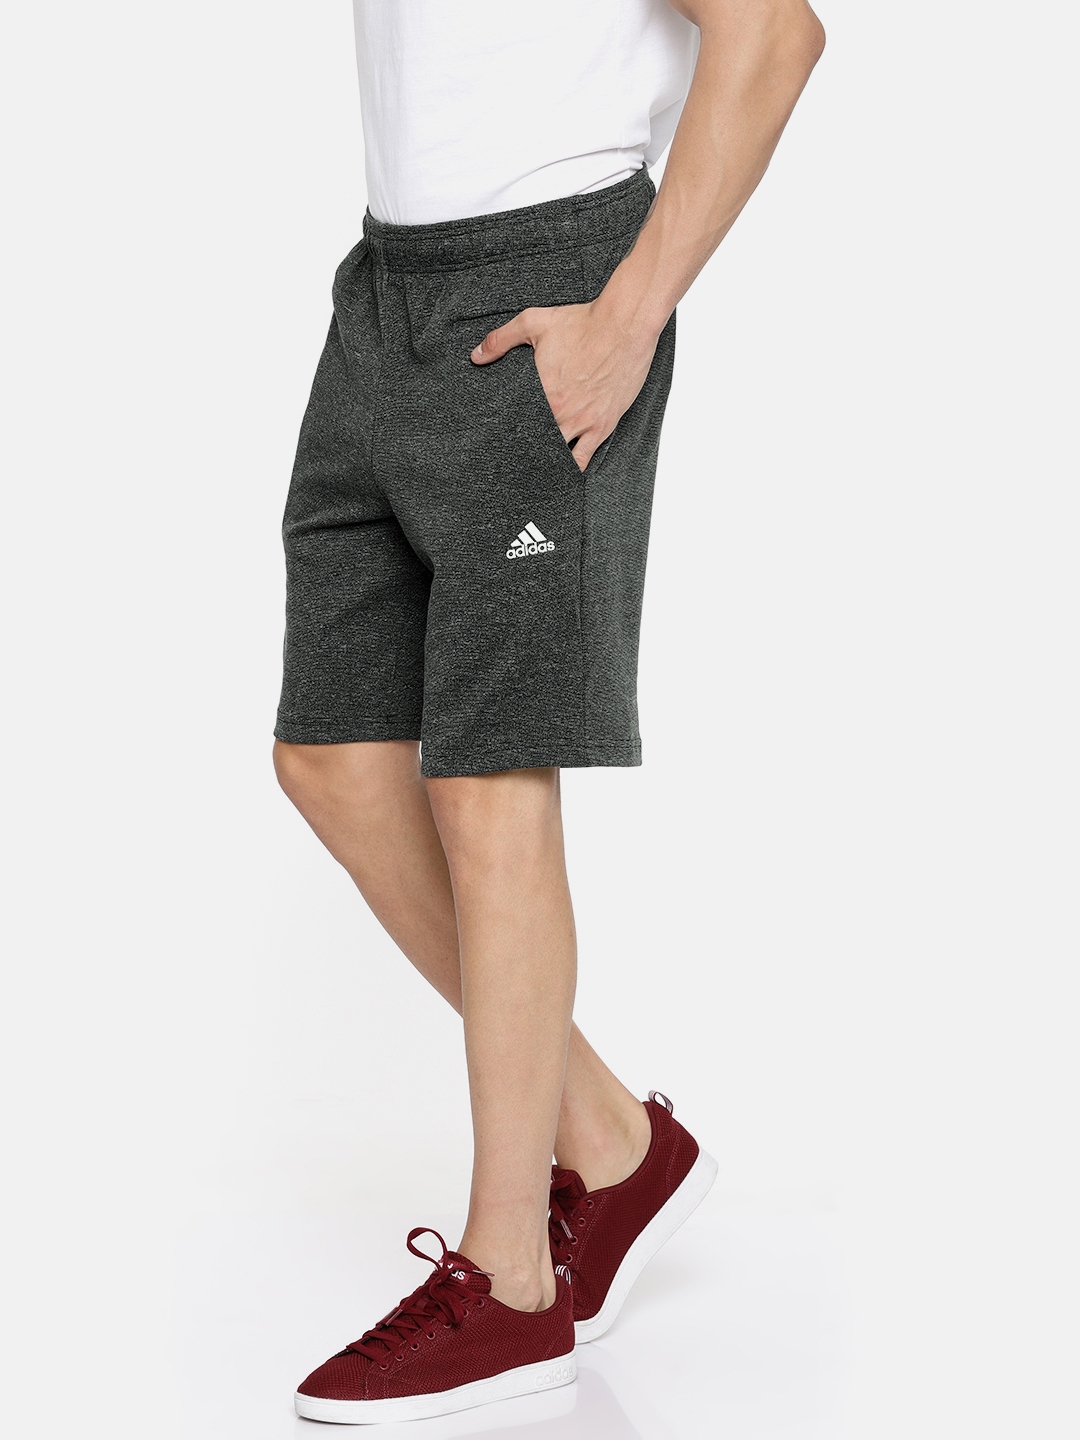 id stadium shorts adidas